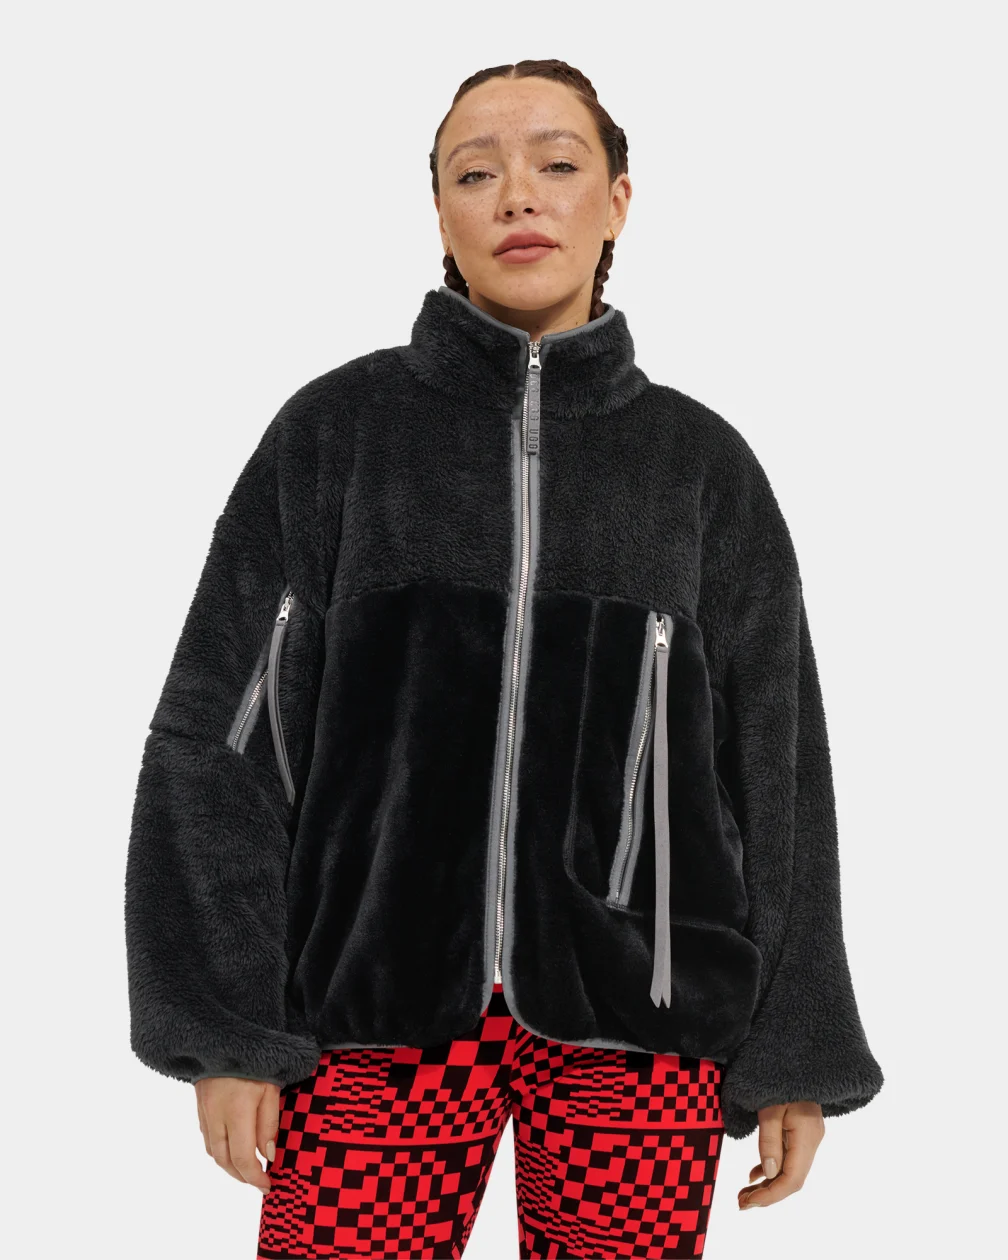 Relaxed Cozy Sherpa Faux-Fur Jacket for Women